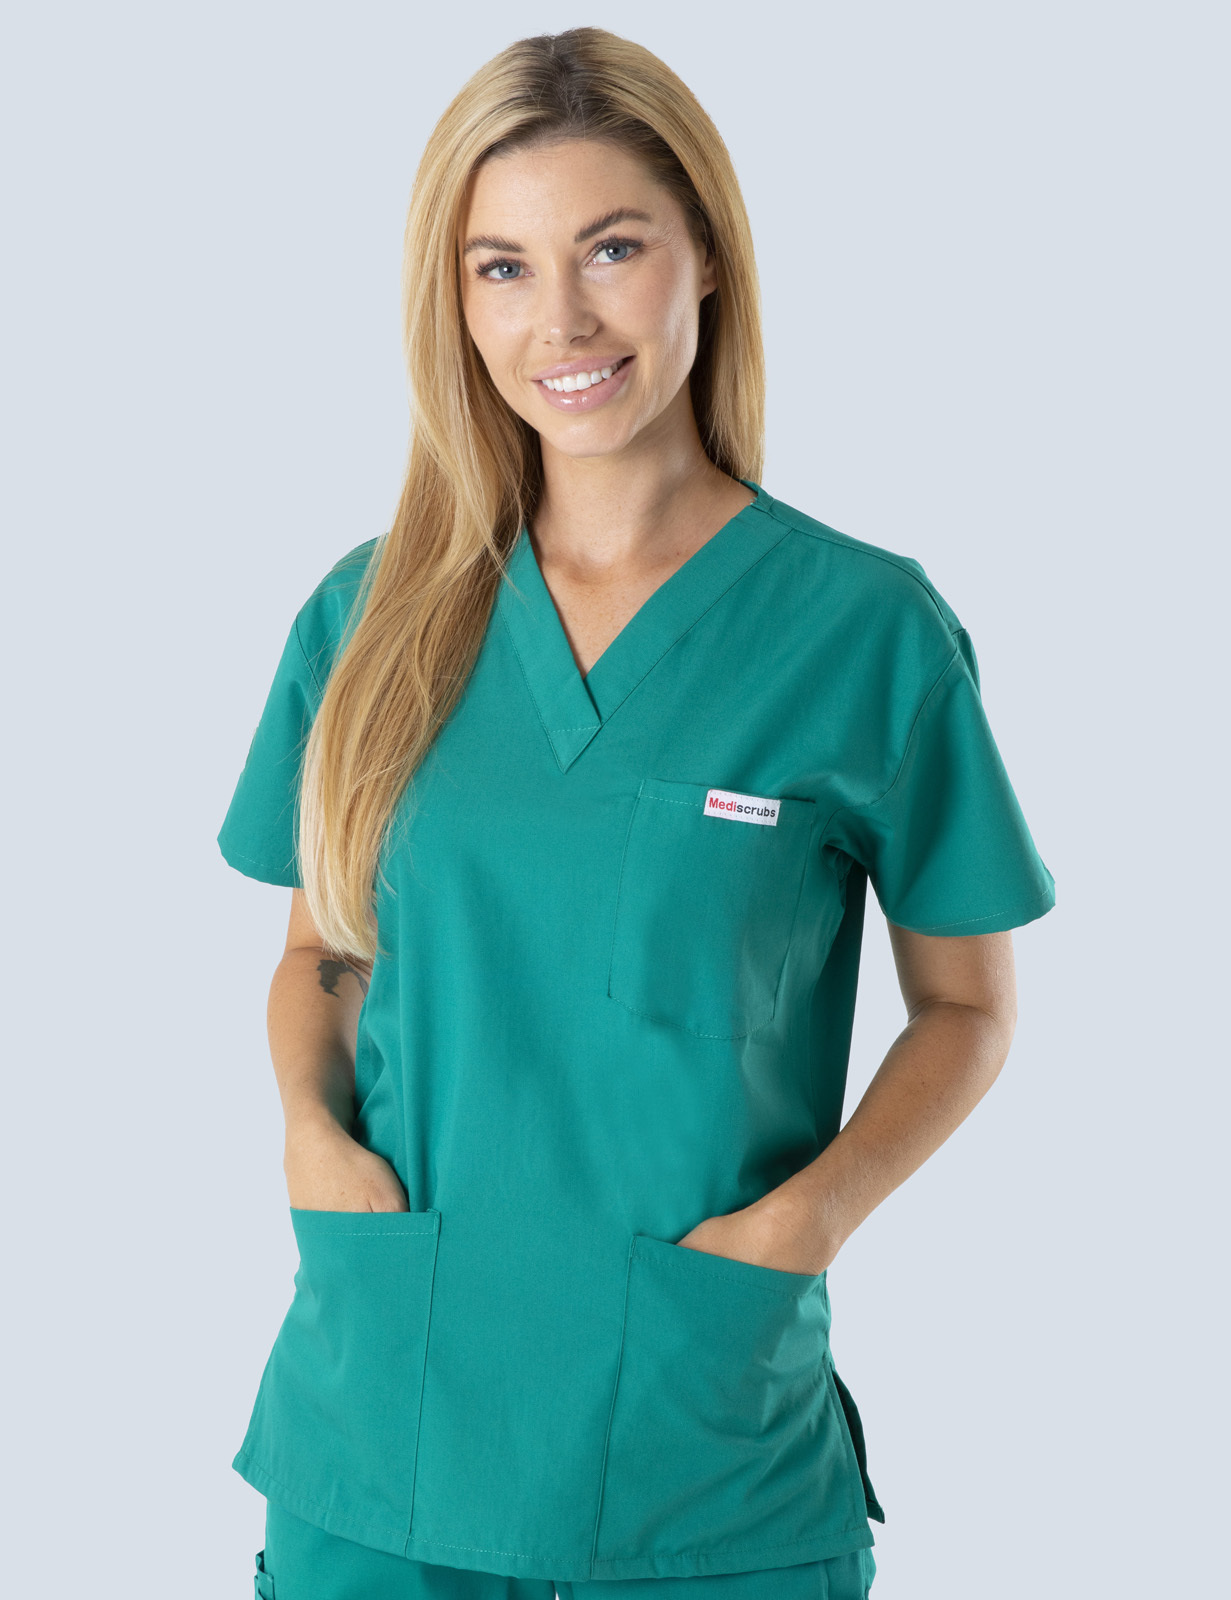 Queensland Children's Hospital Emergency Department Assistant in Nursing  Uniform Top Bundle  (4 Pocket Top in Hunter incl Logos)